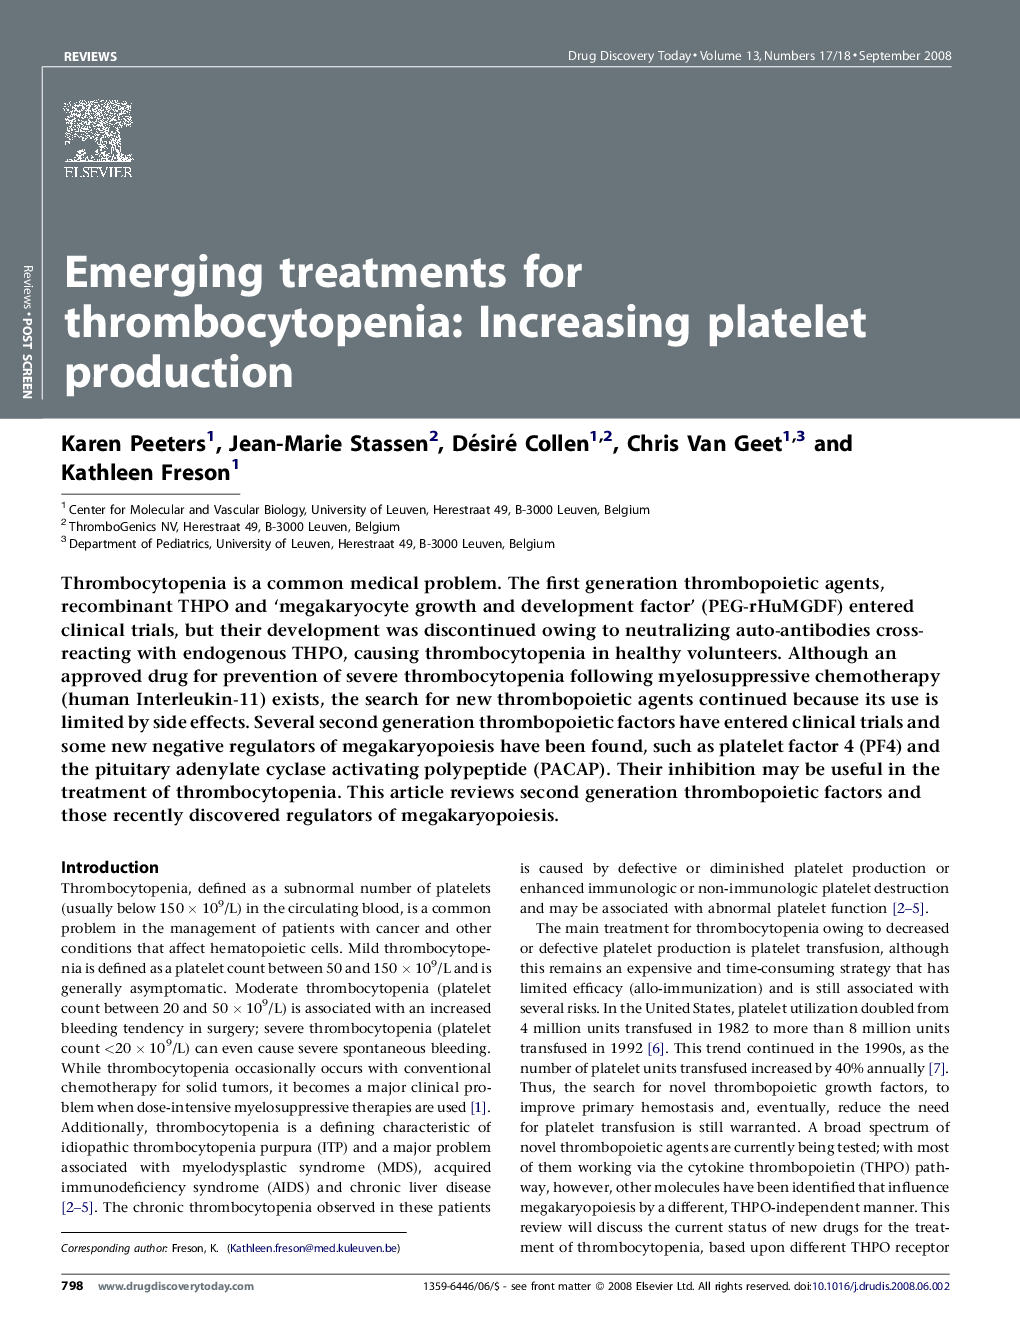 Emerging treatments for thrombocytopenia: Increasing platelet production